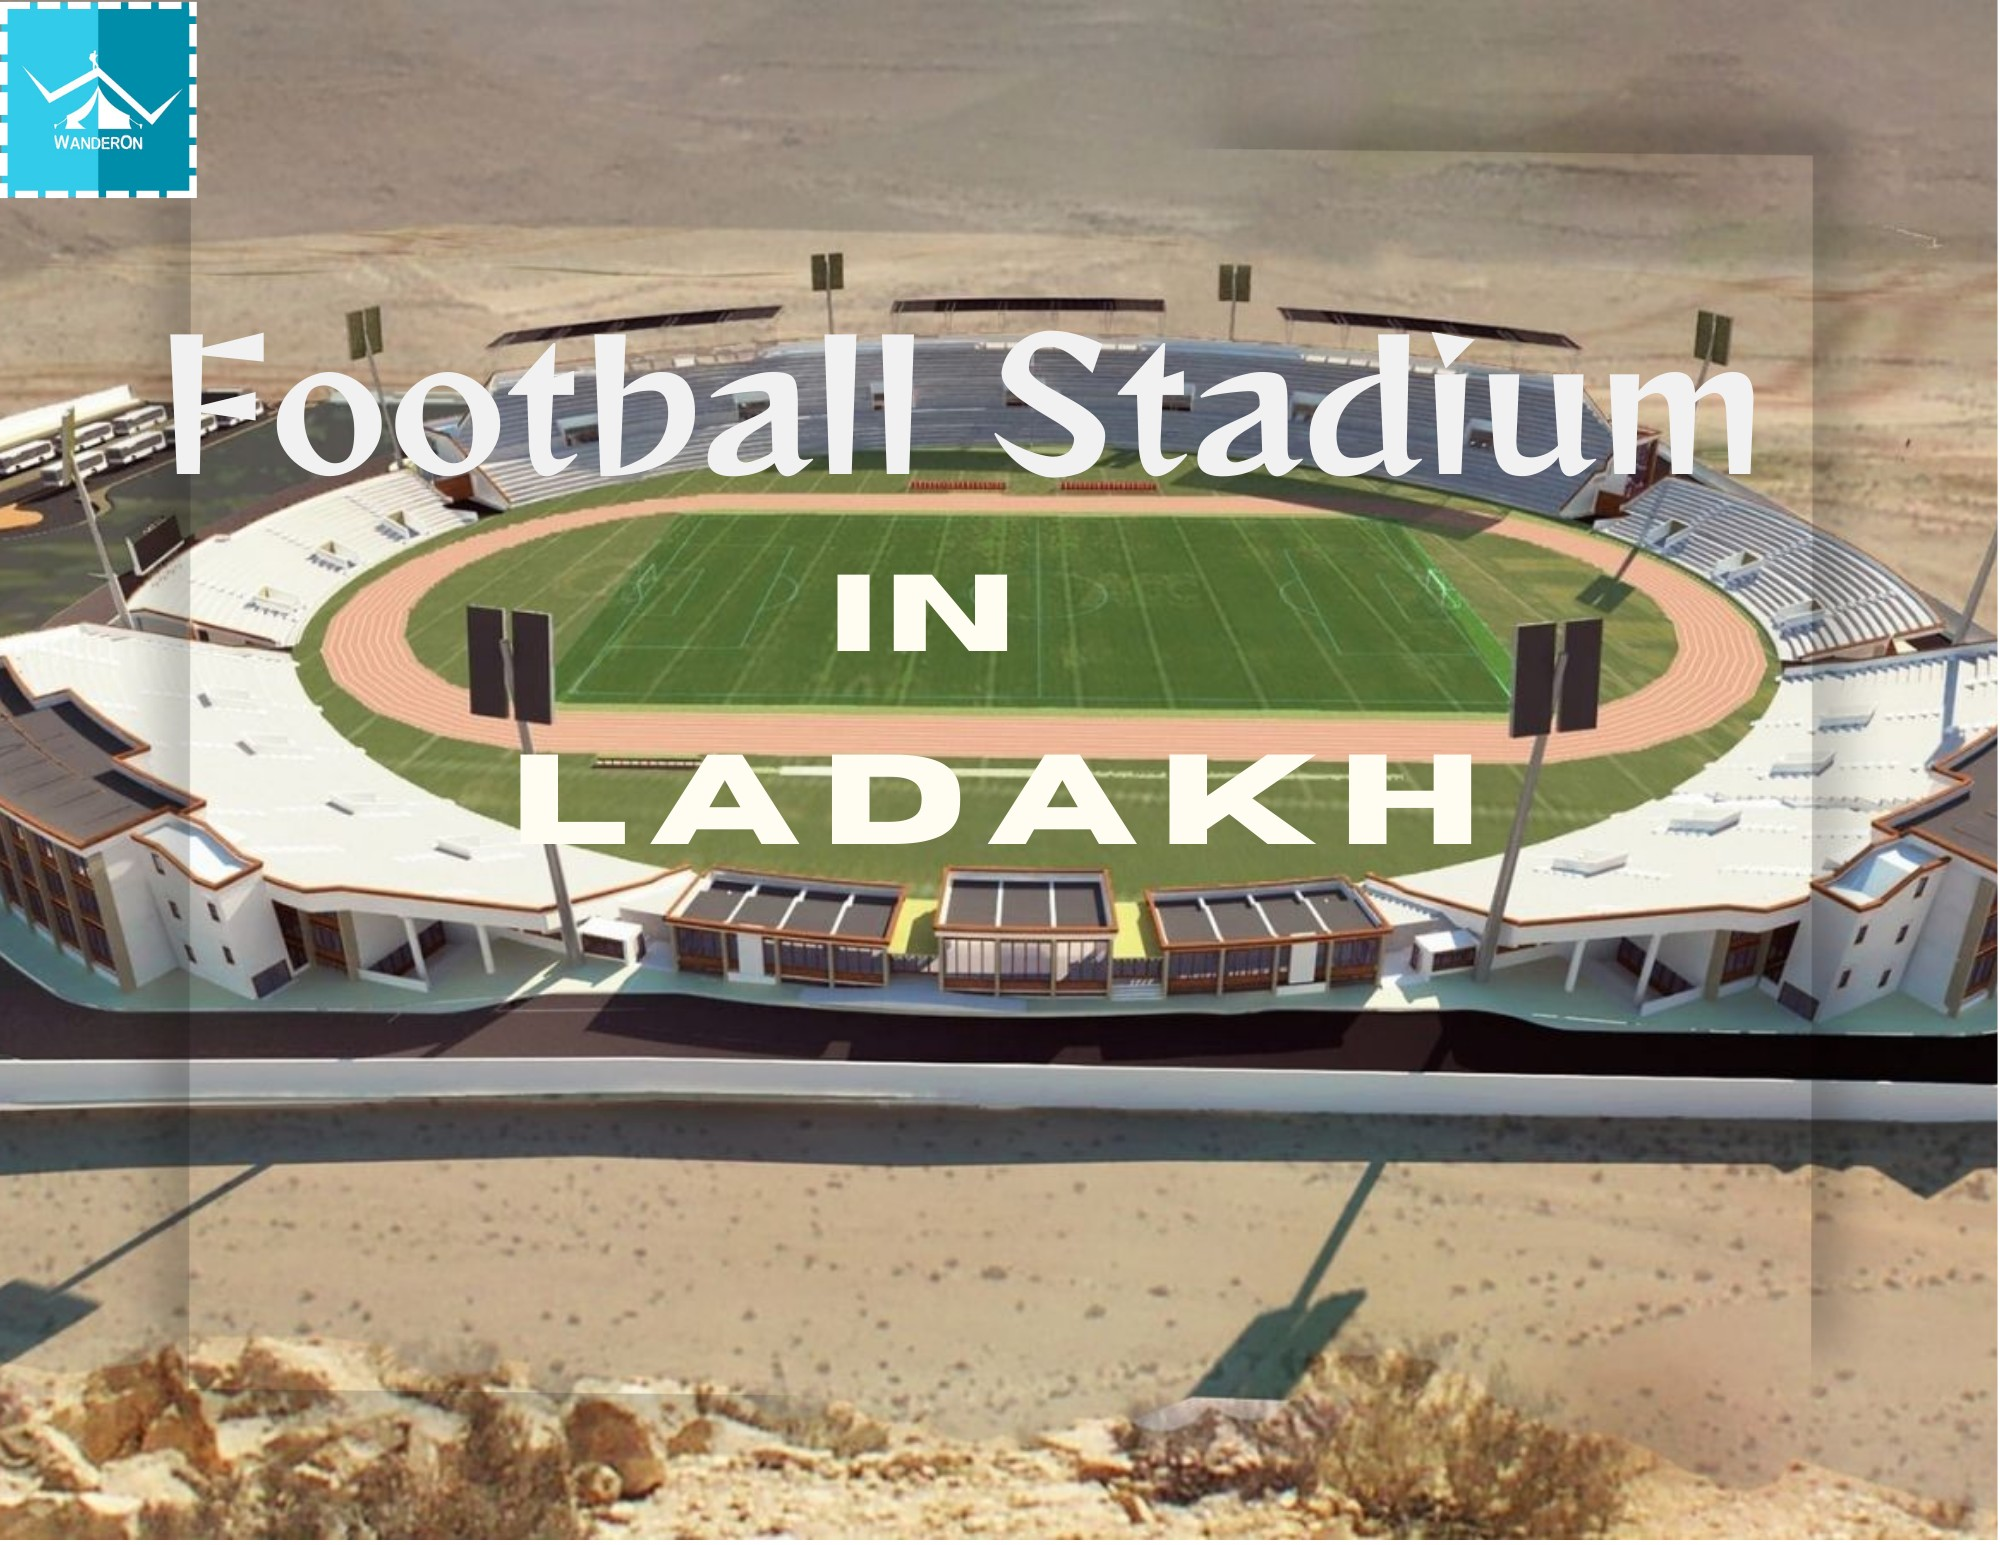 Ladakh Football Stadium, Where Sport Meets Spectacle